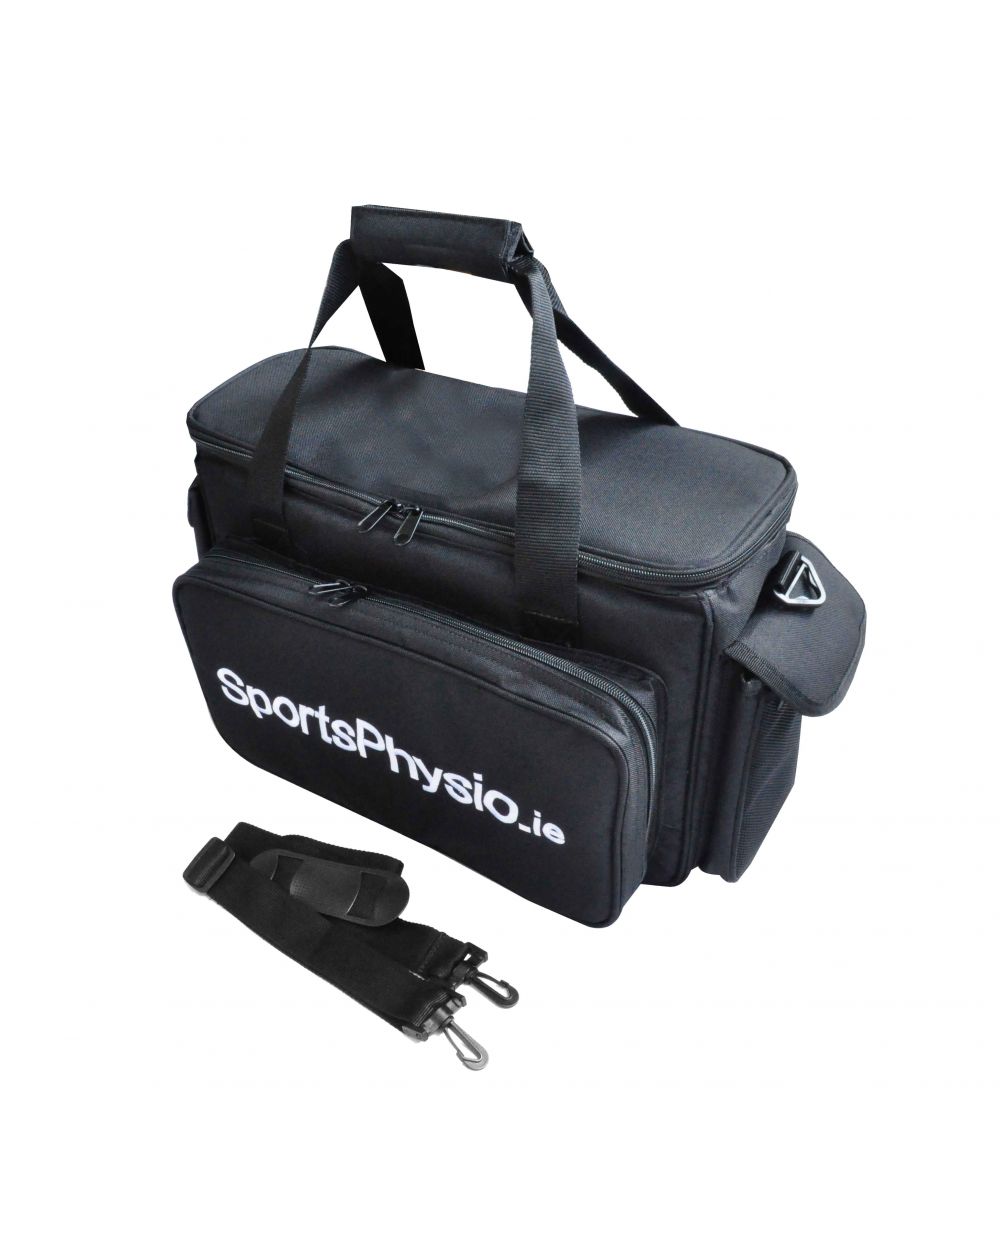 Physio Radiance Crossbody Bag